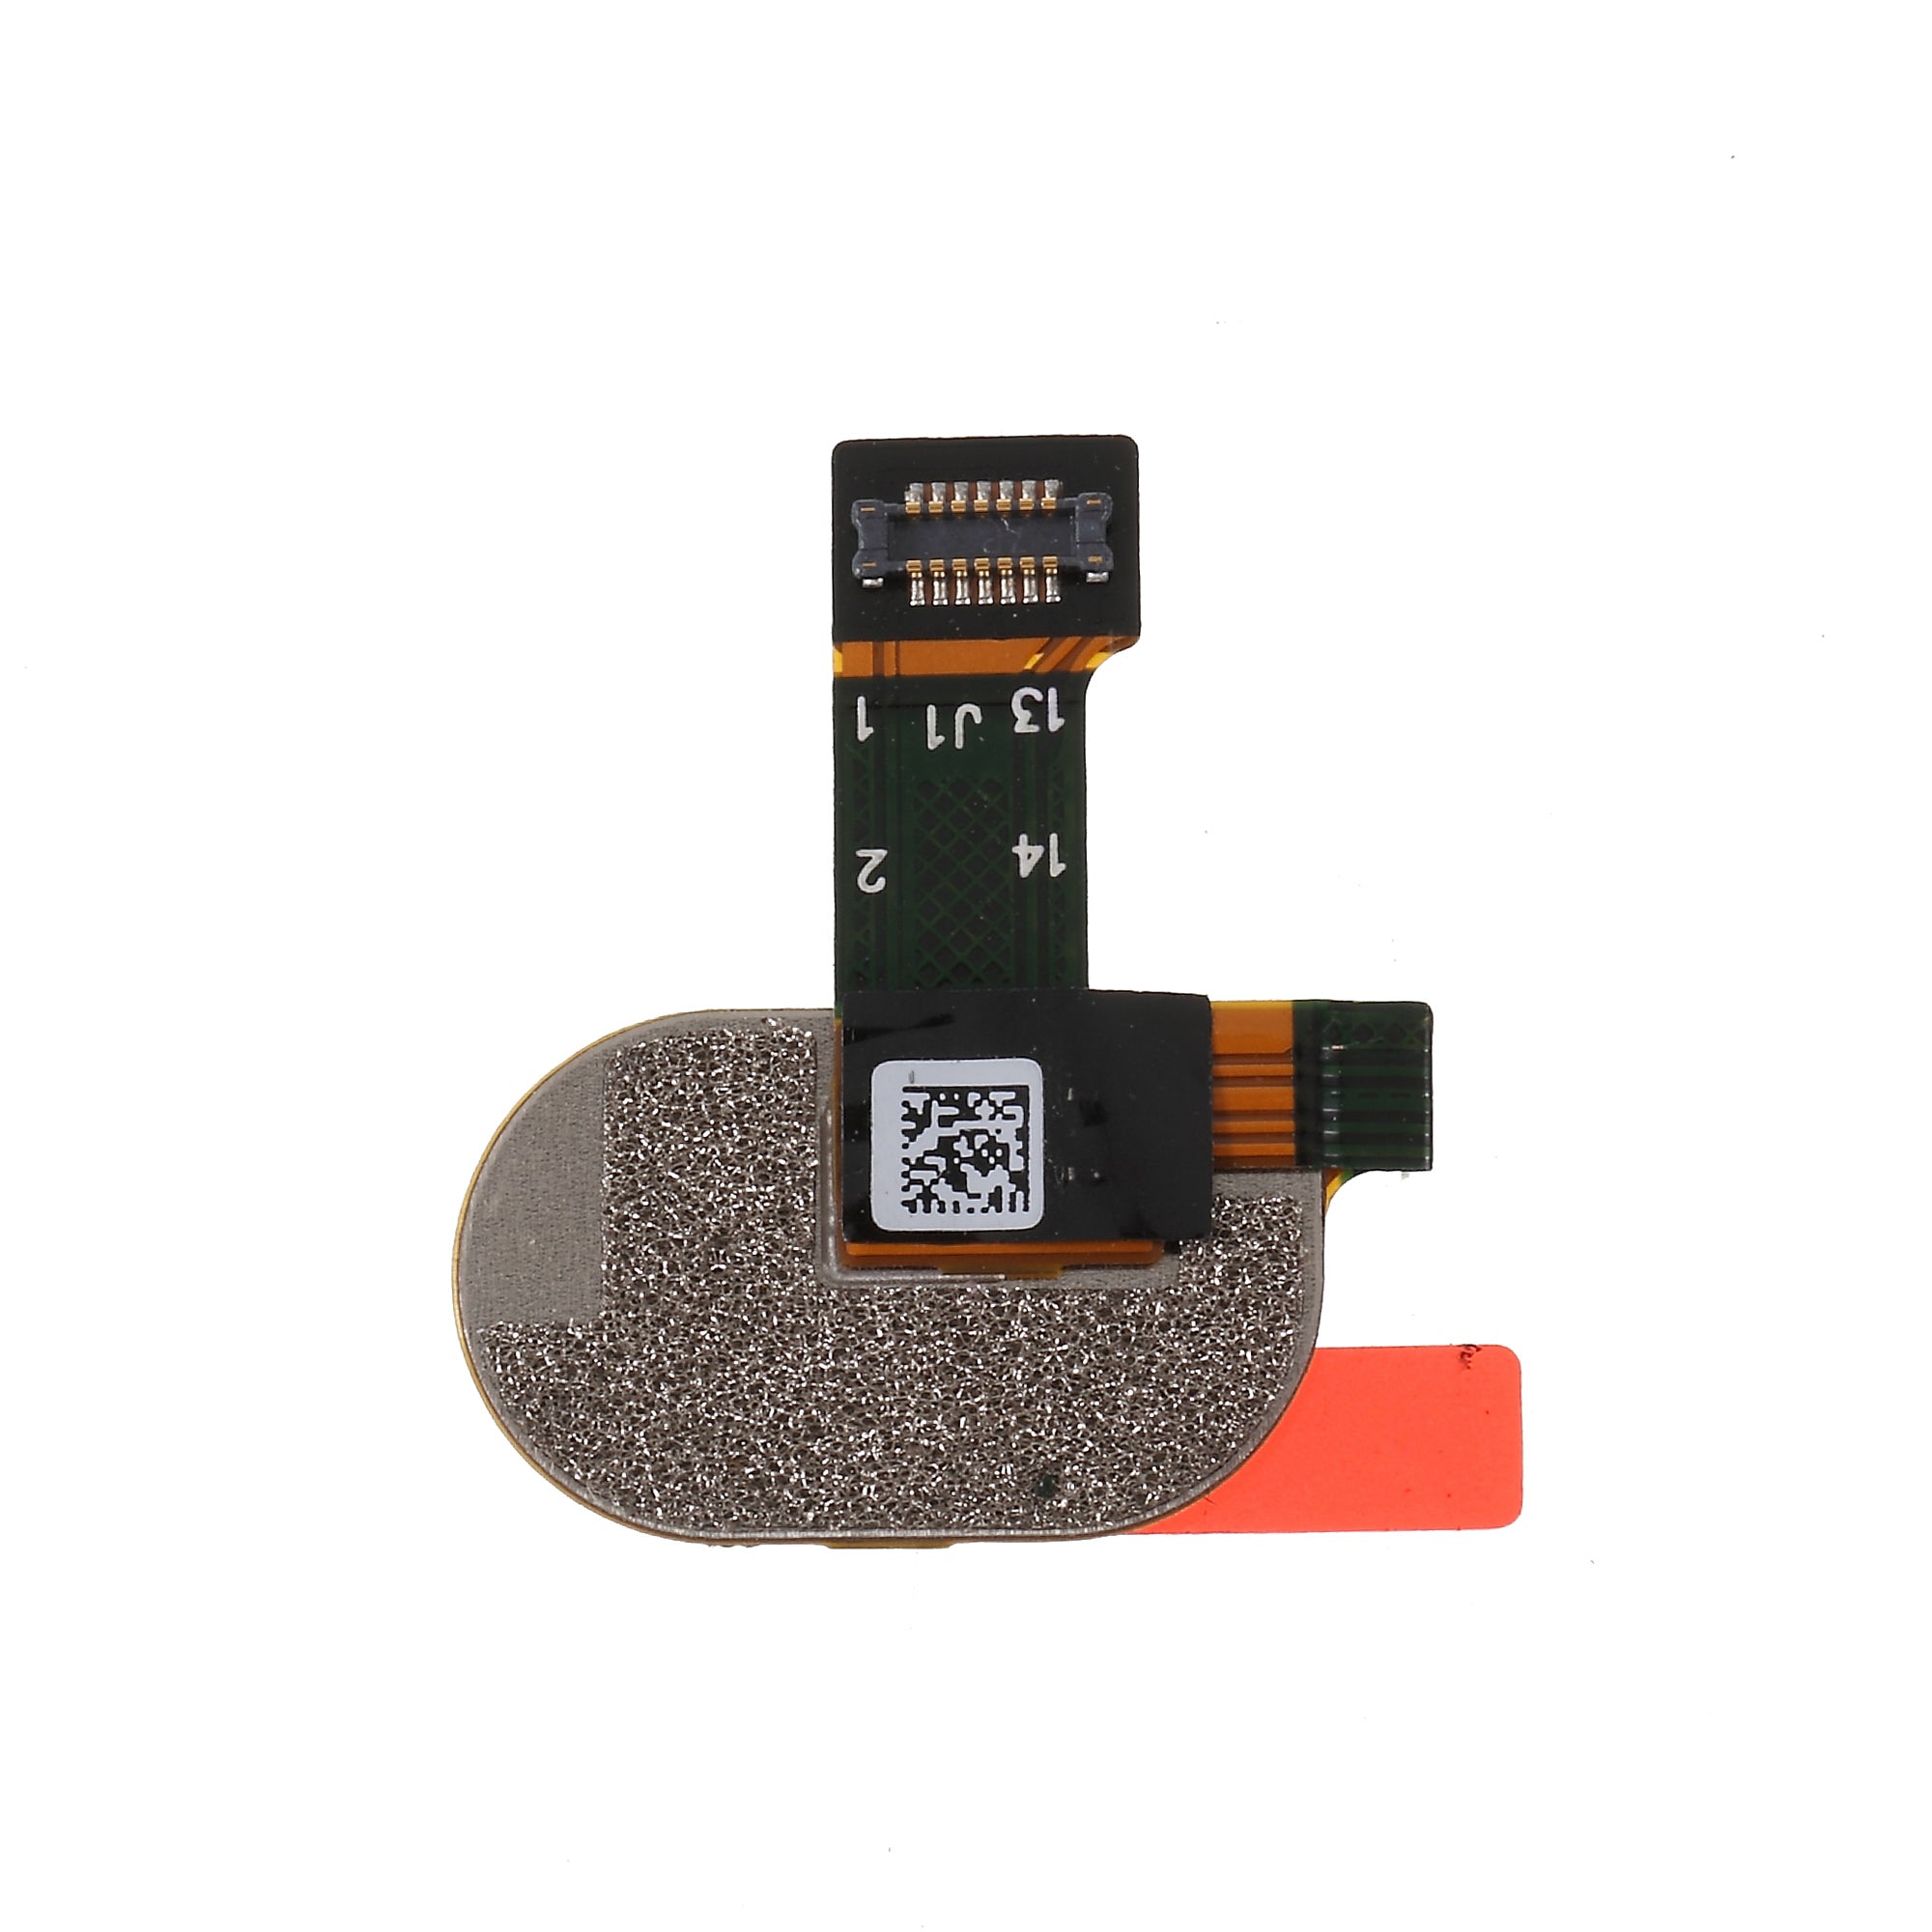 OEM Home Key Fingerprint Button Flex Cable Part for Motorola Moto E4 - Black